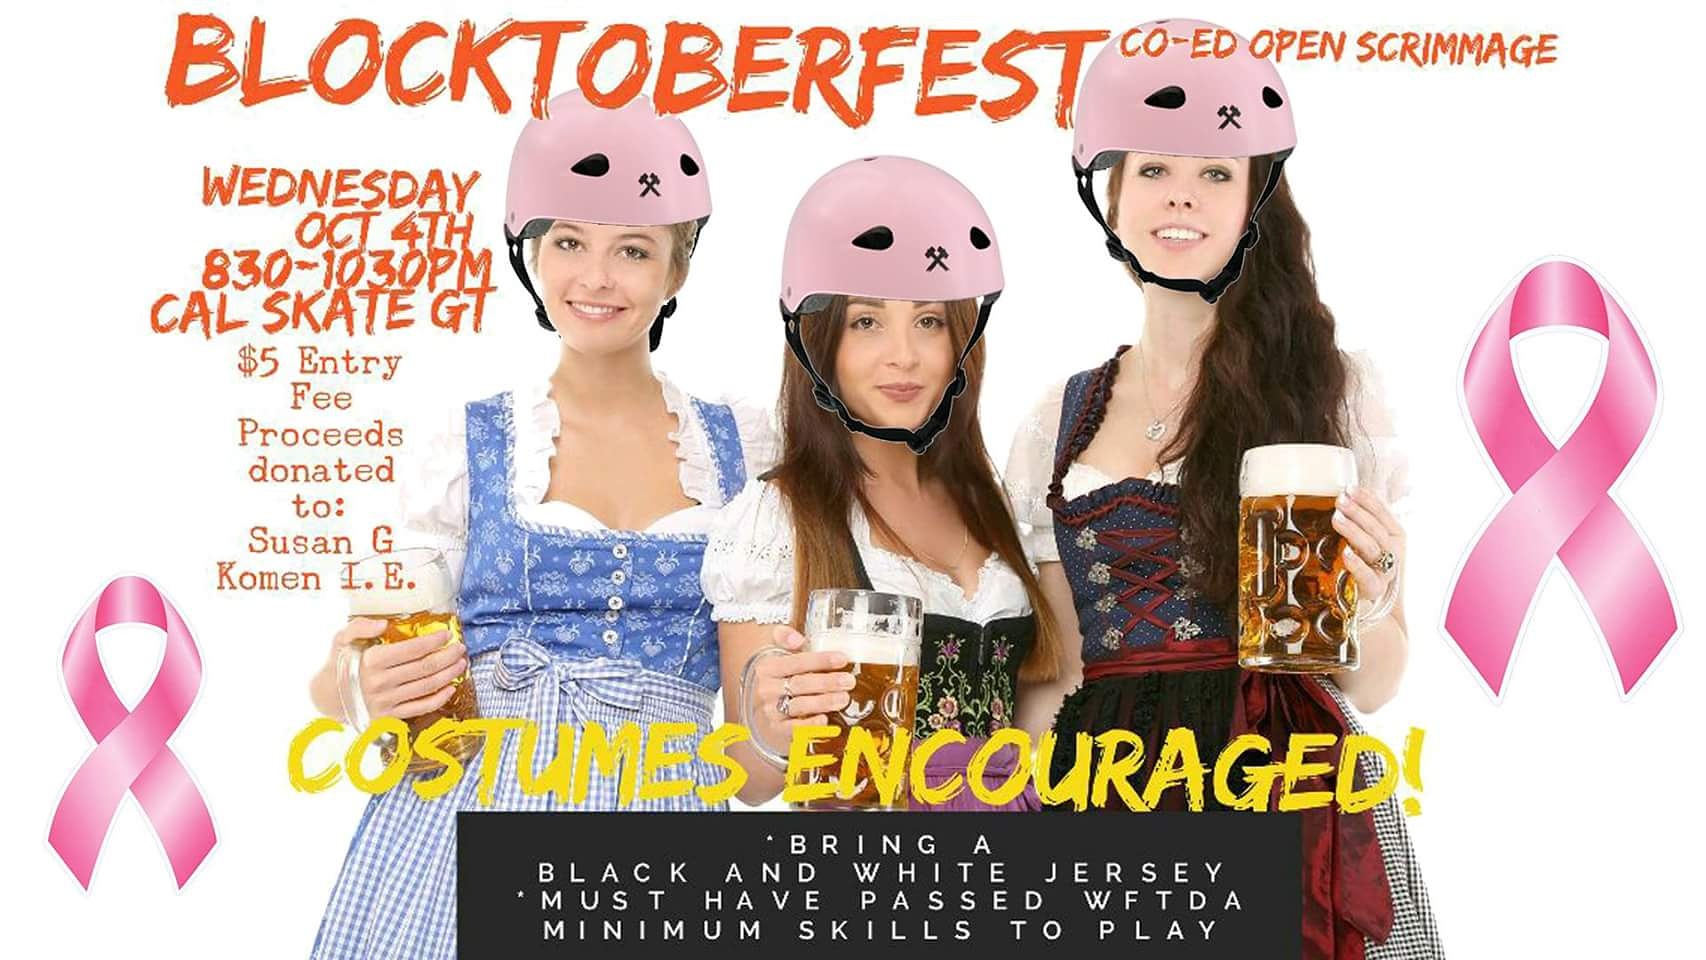 IE Derby Divas October 2017 Blocktoberfest